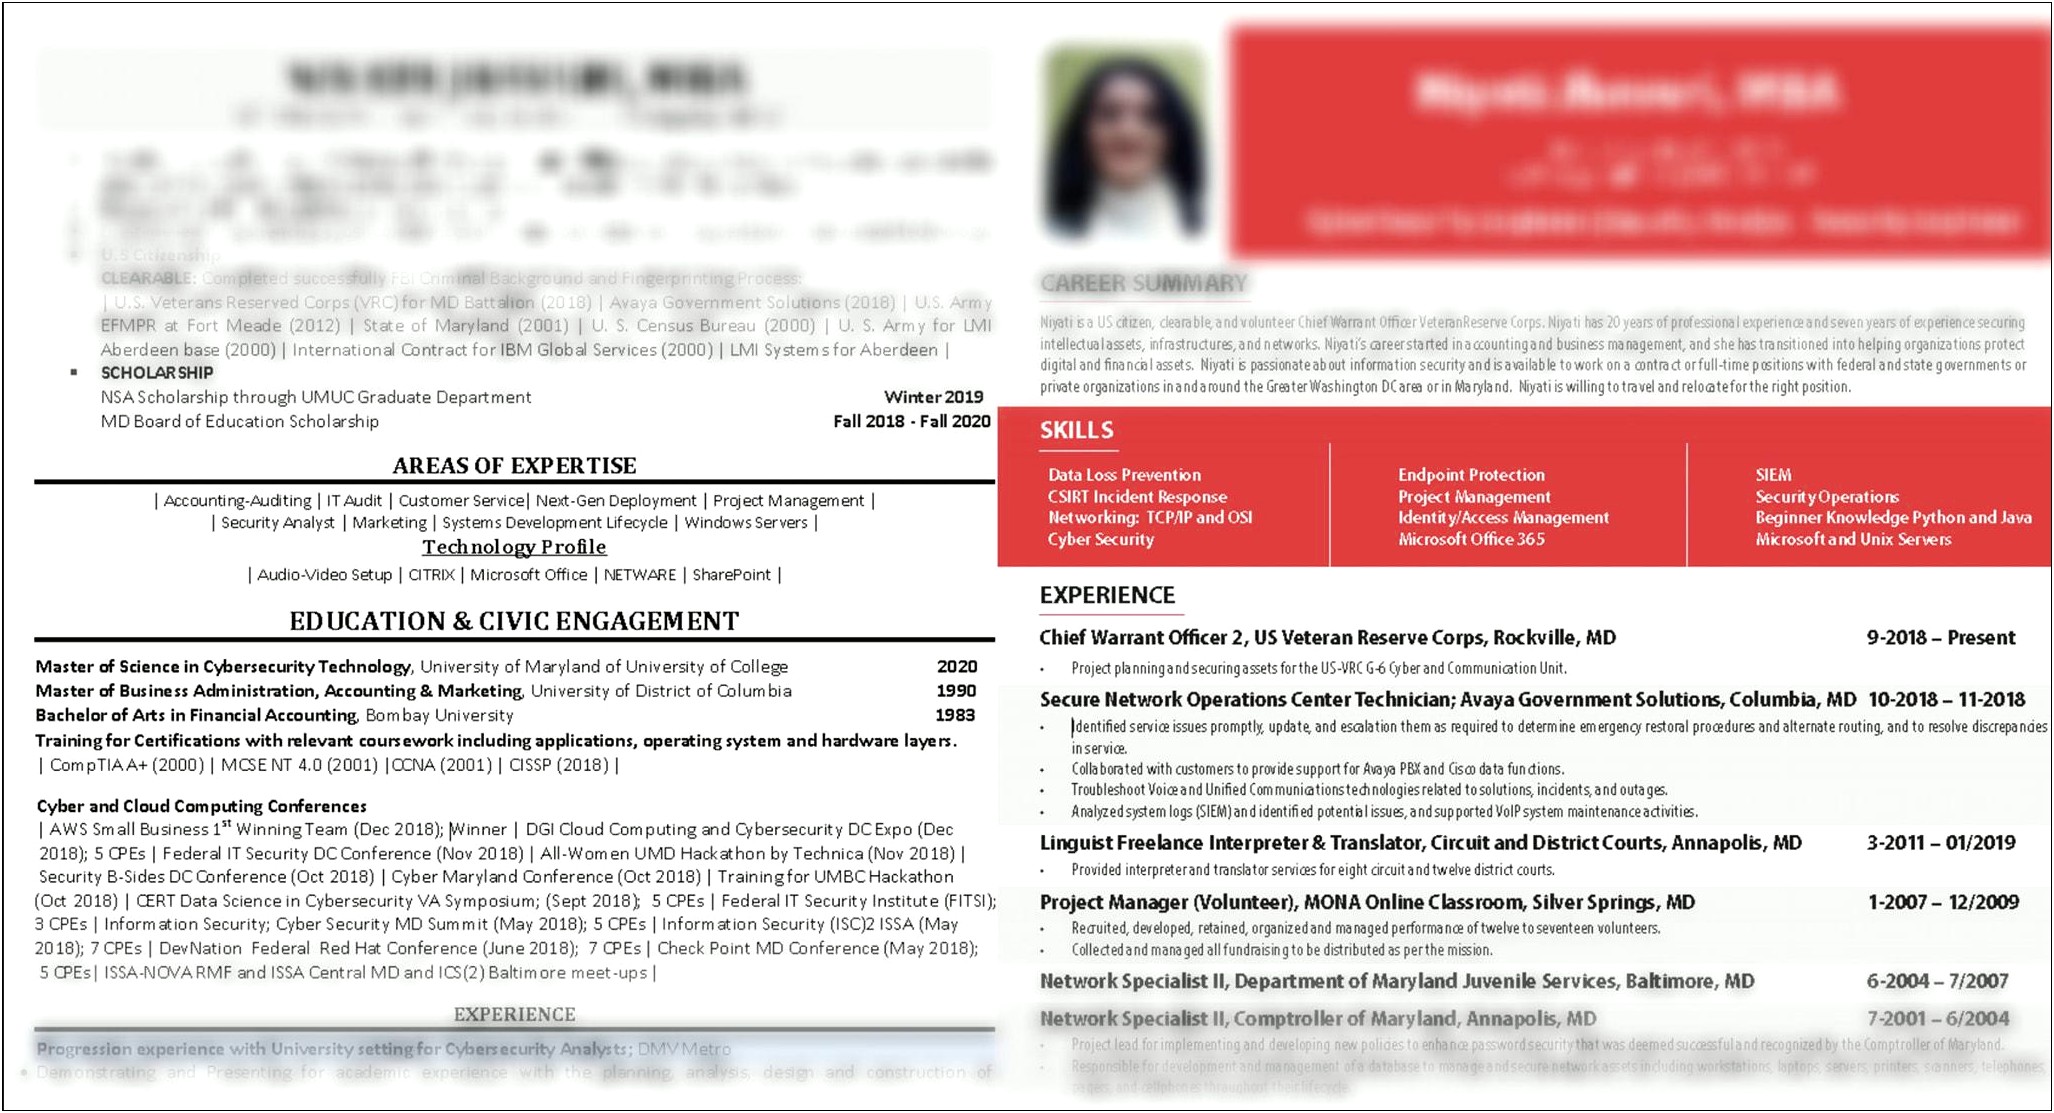 Identity Access Management Analyst Resume Summary